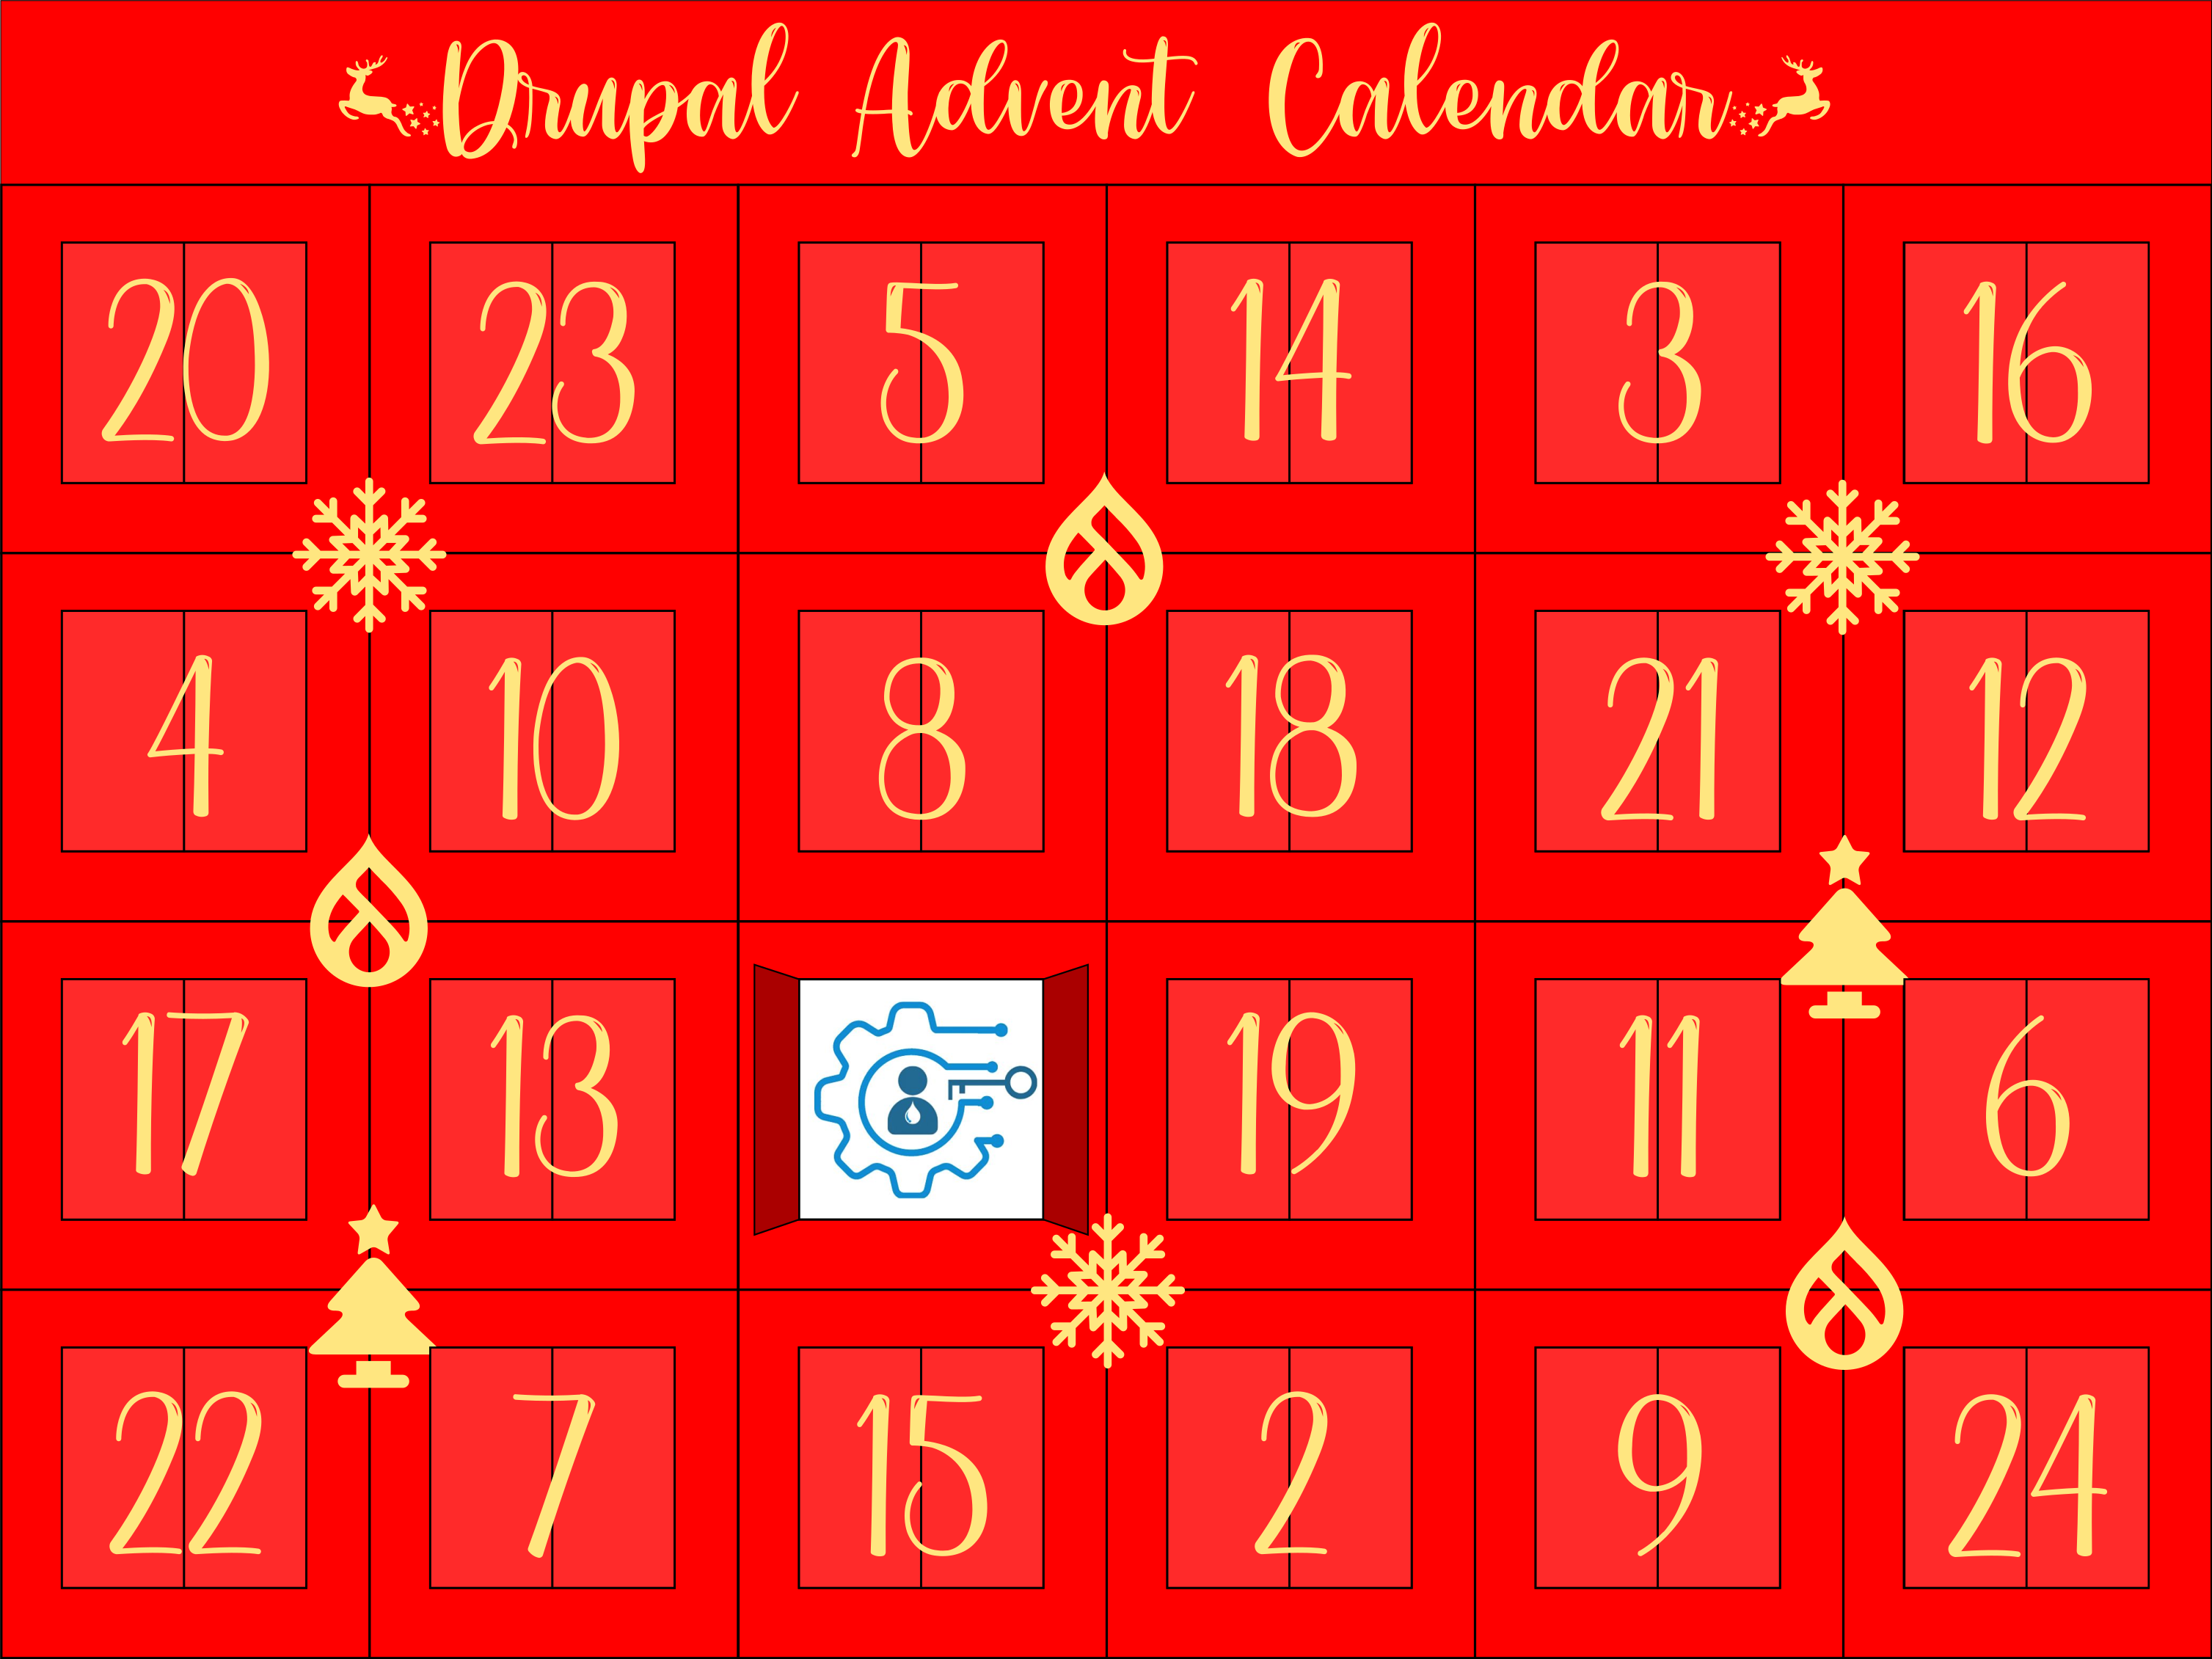 Advent Calendar with Day 1 door open showing Admin Toolbar logo